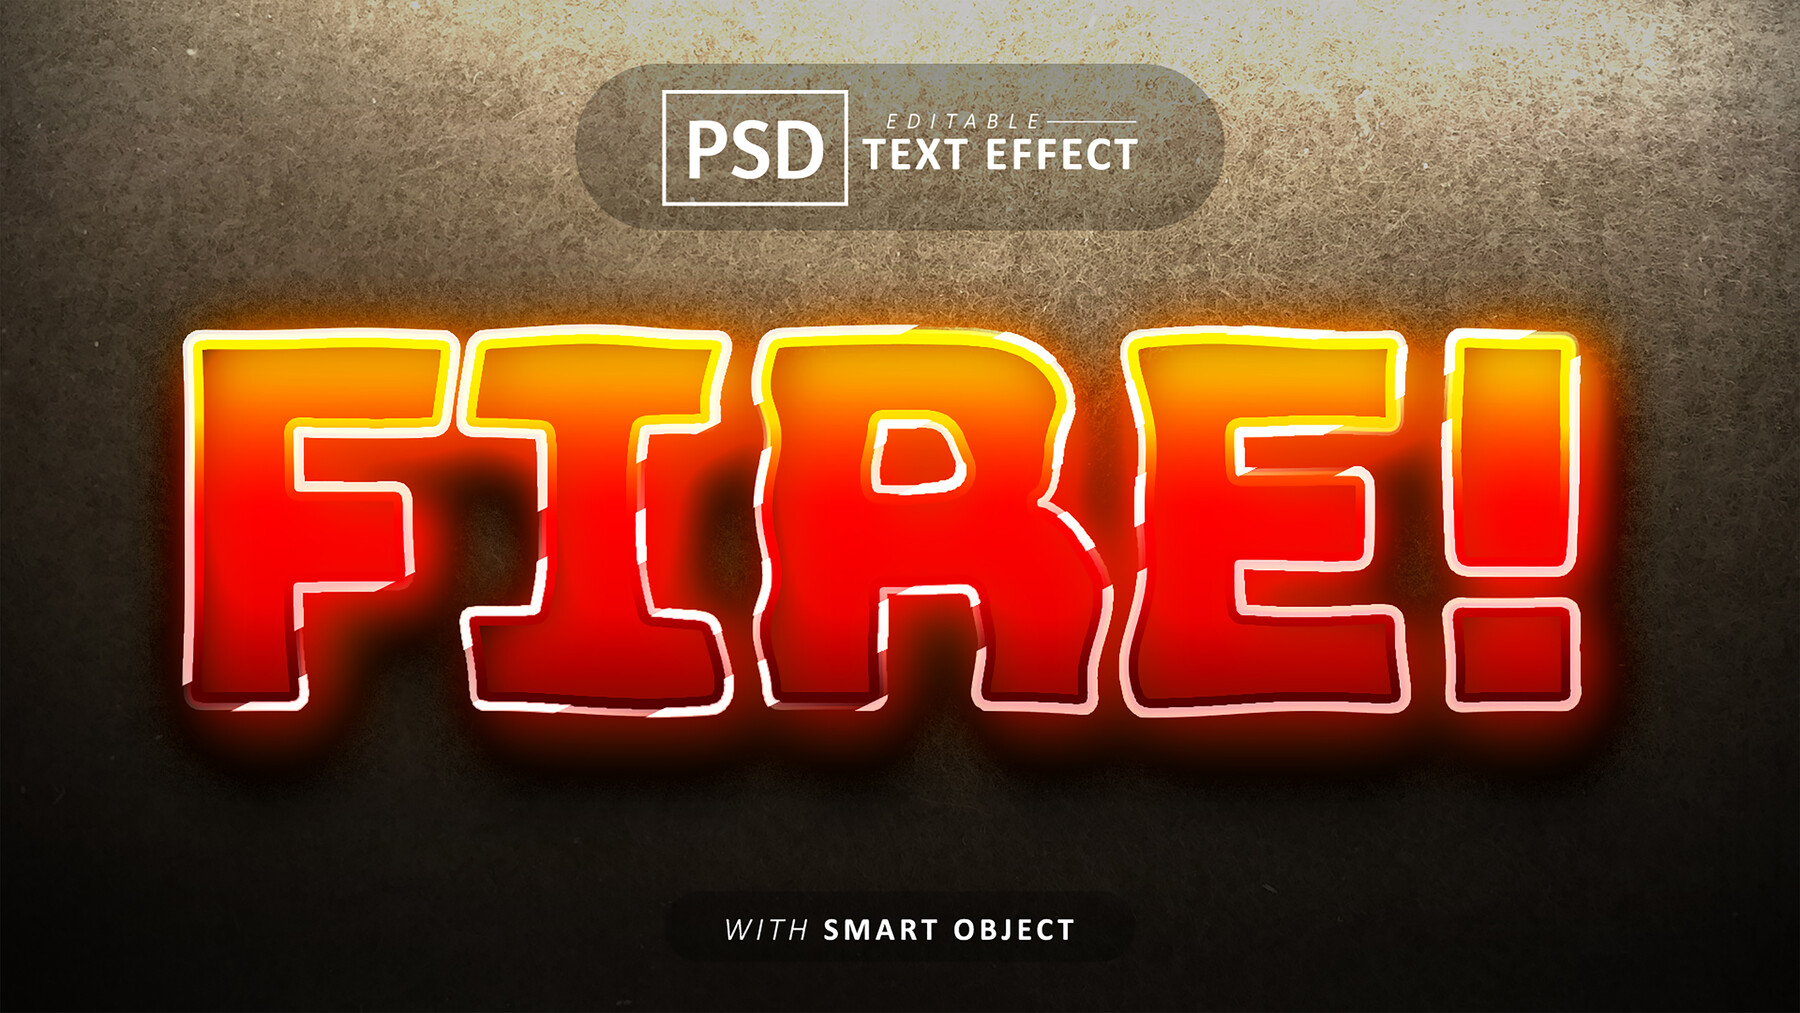 ArtStation - 3D Fire. PSD fully editable text effect. Layer style PSD ...